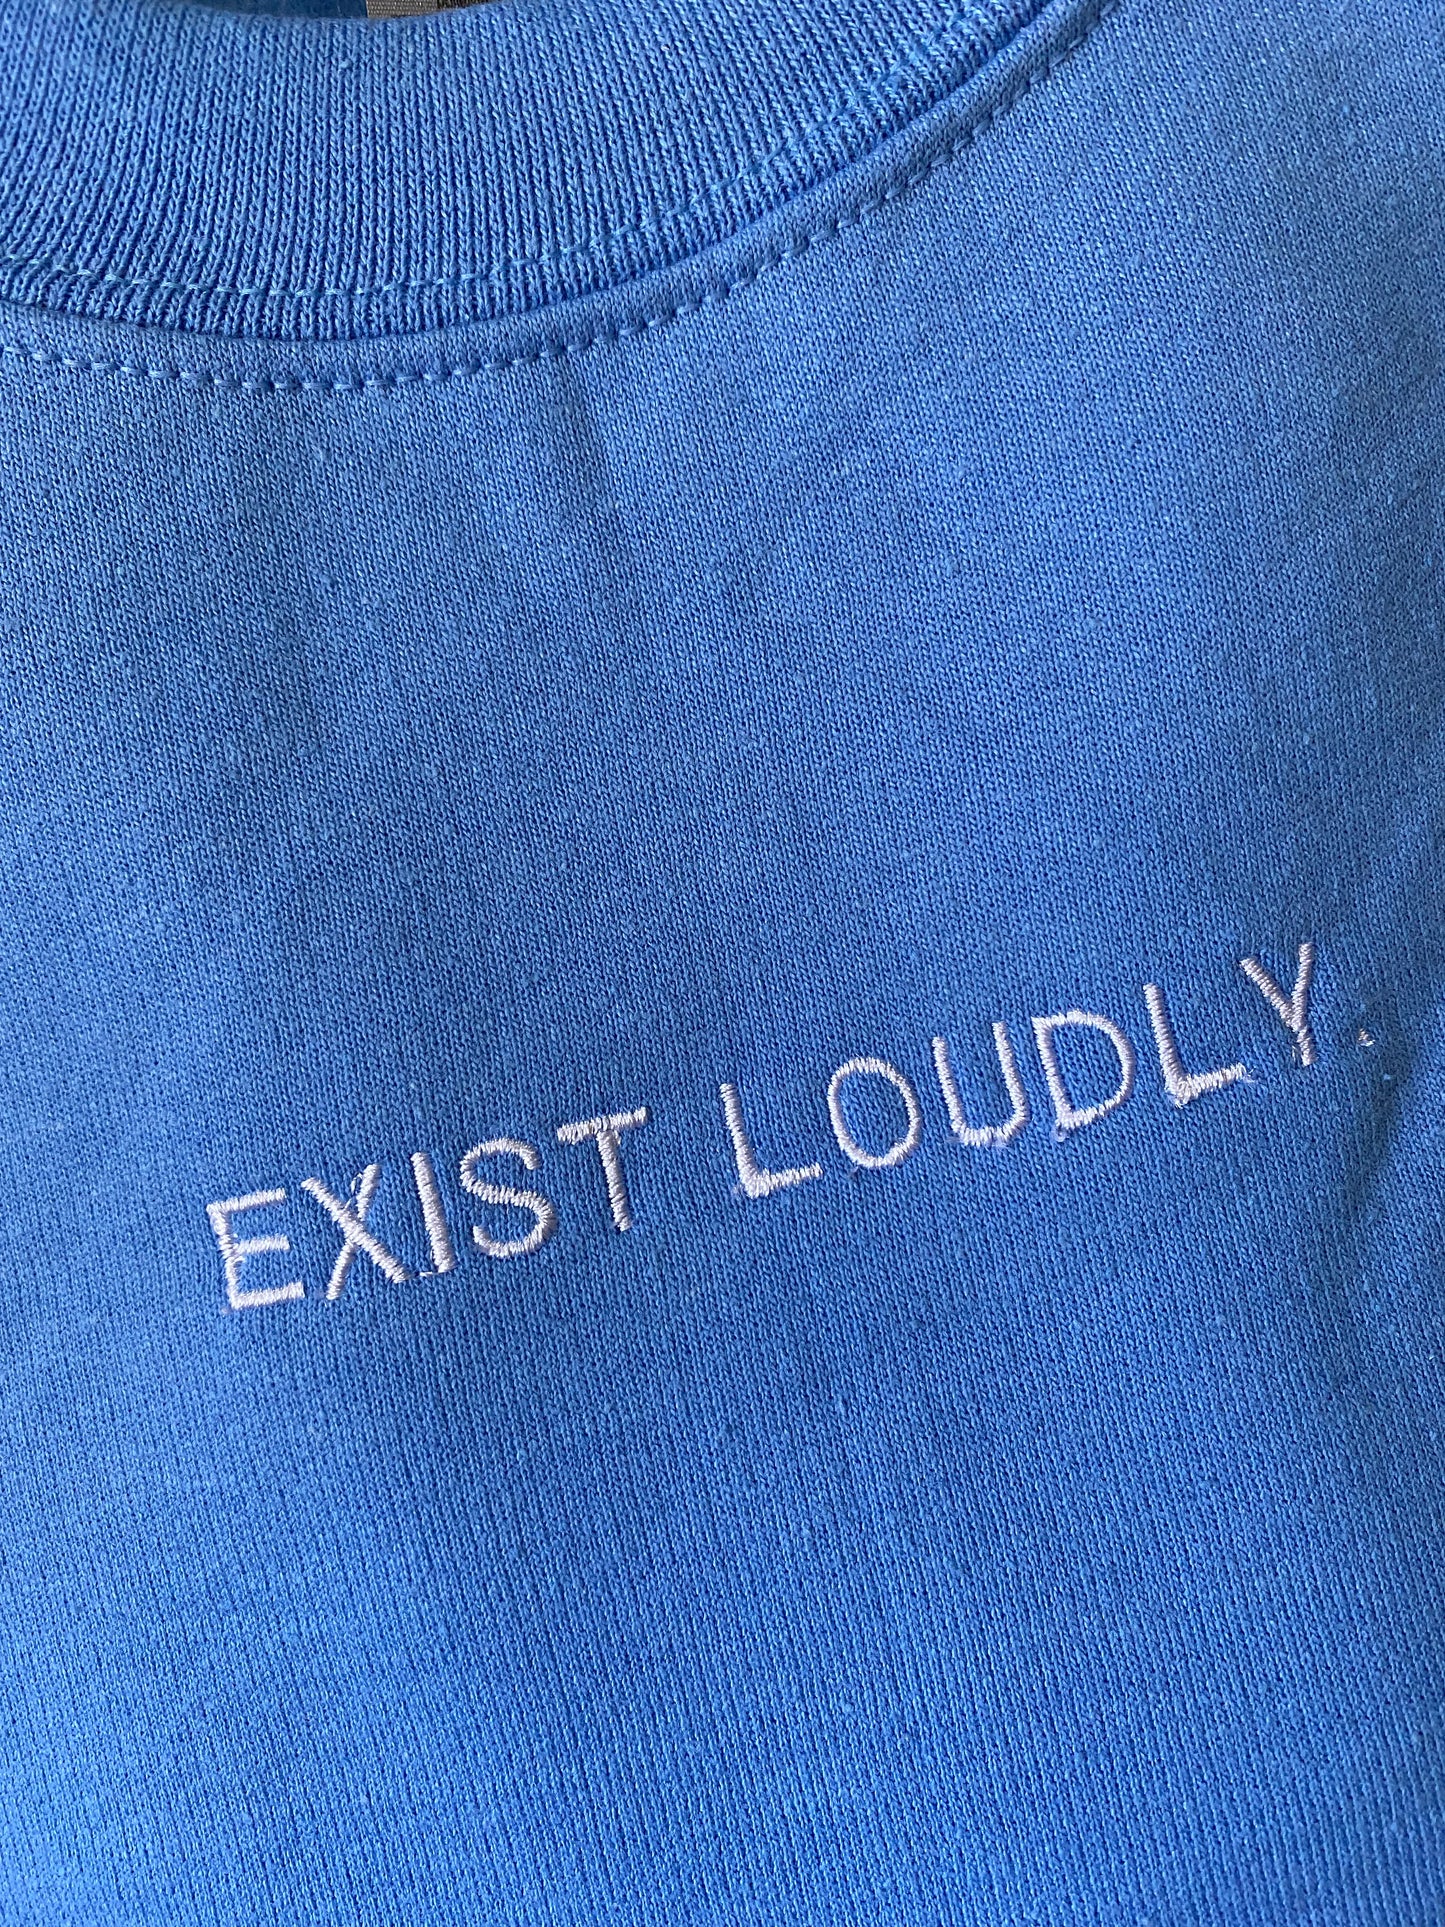 Exist Loudly Sweatshirt Medium